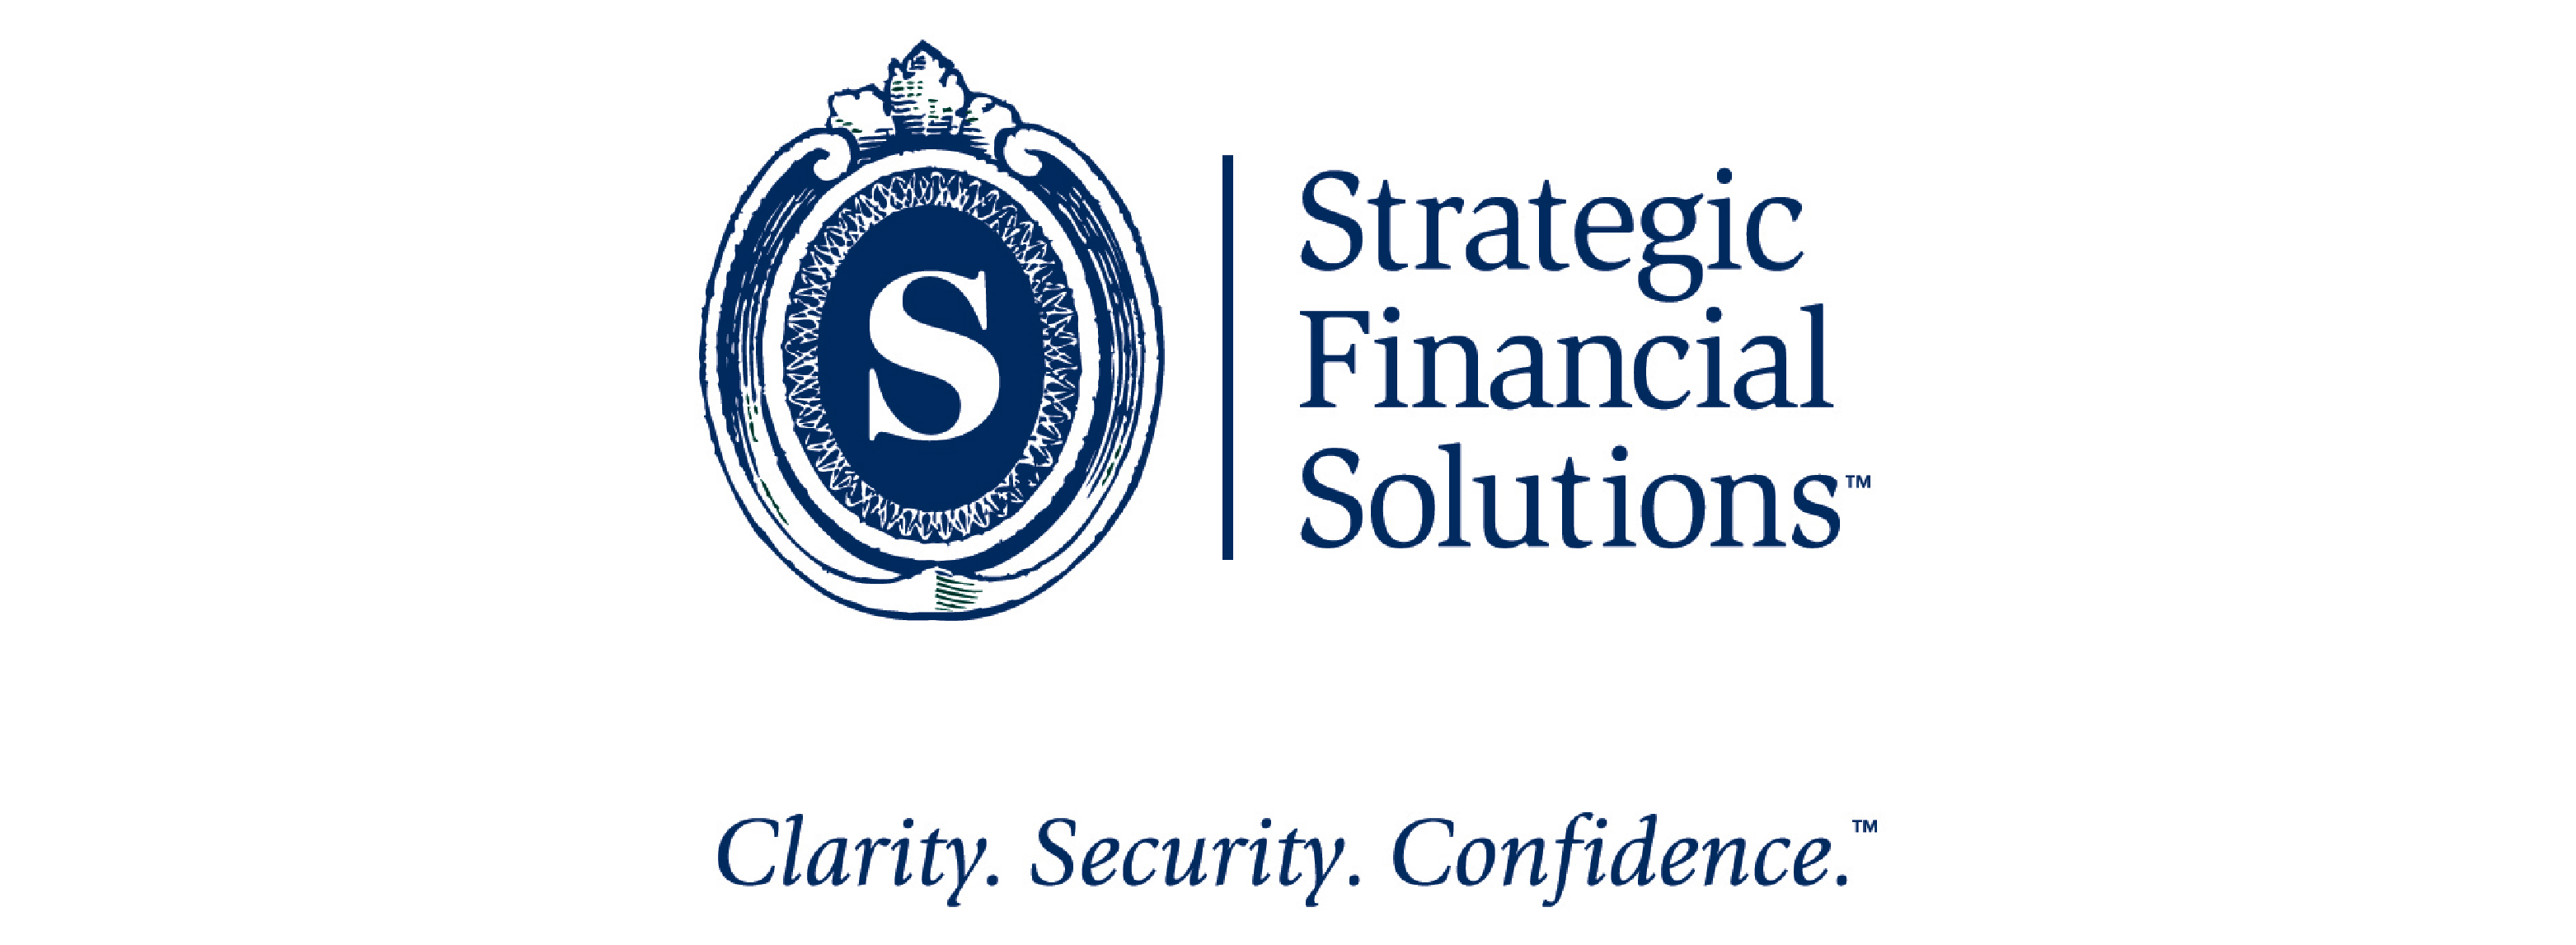 Strategic Financial Solutions